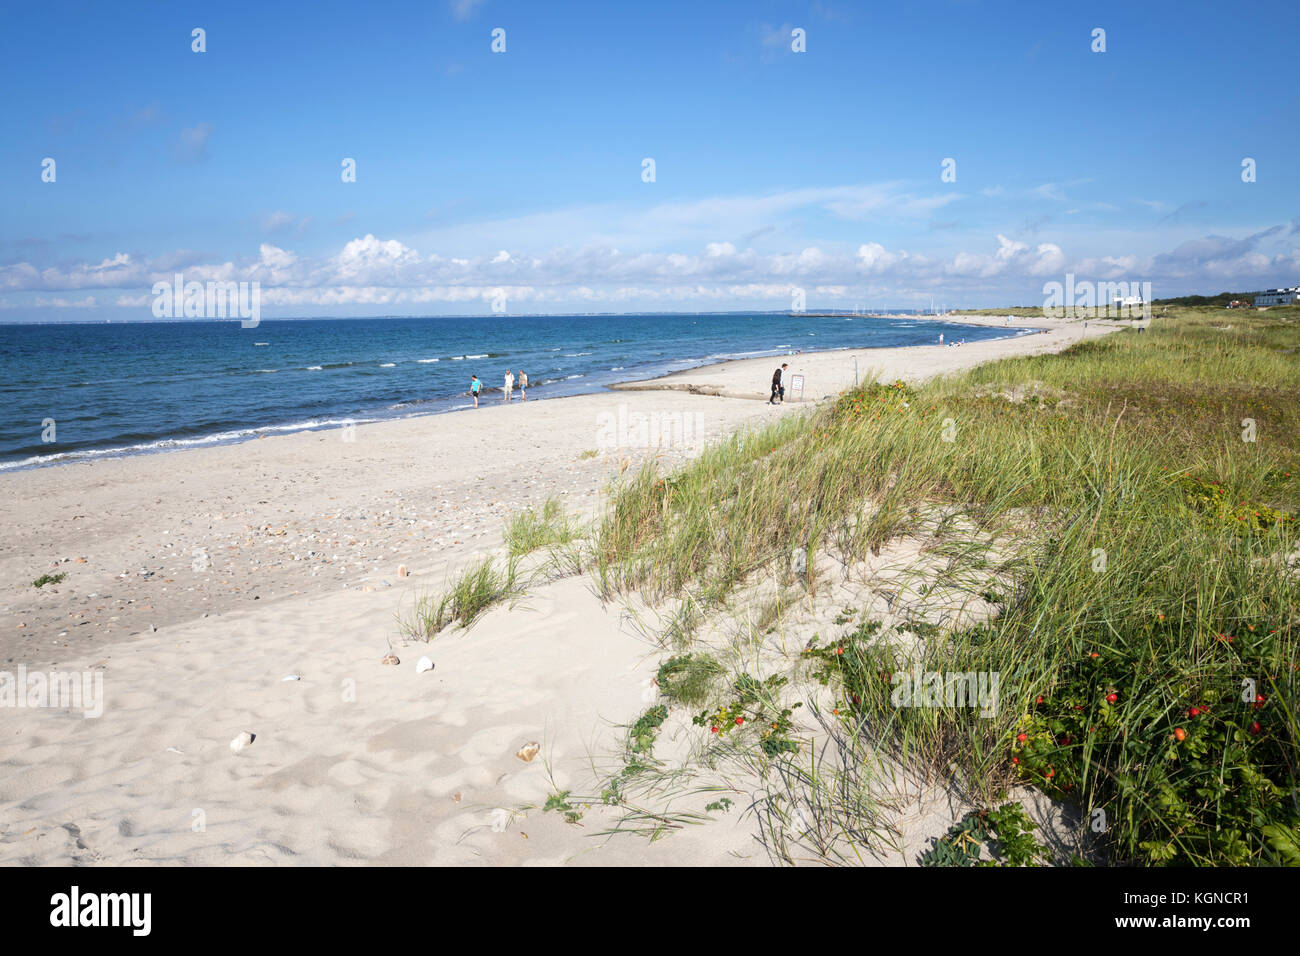 Hornbaek beach with white sand and sand dunes, Hornbaek, Kattegat Coast, Zealand, Denmark, Europe Stock Photo